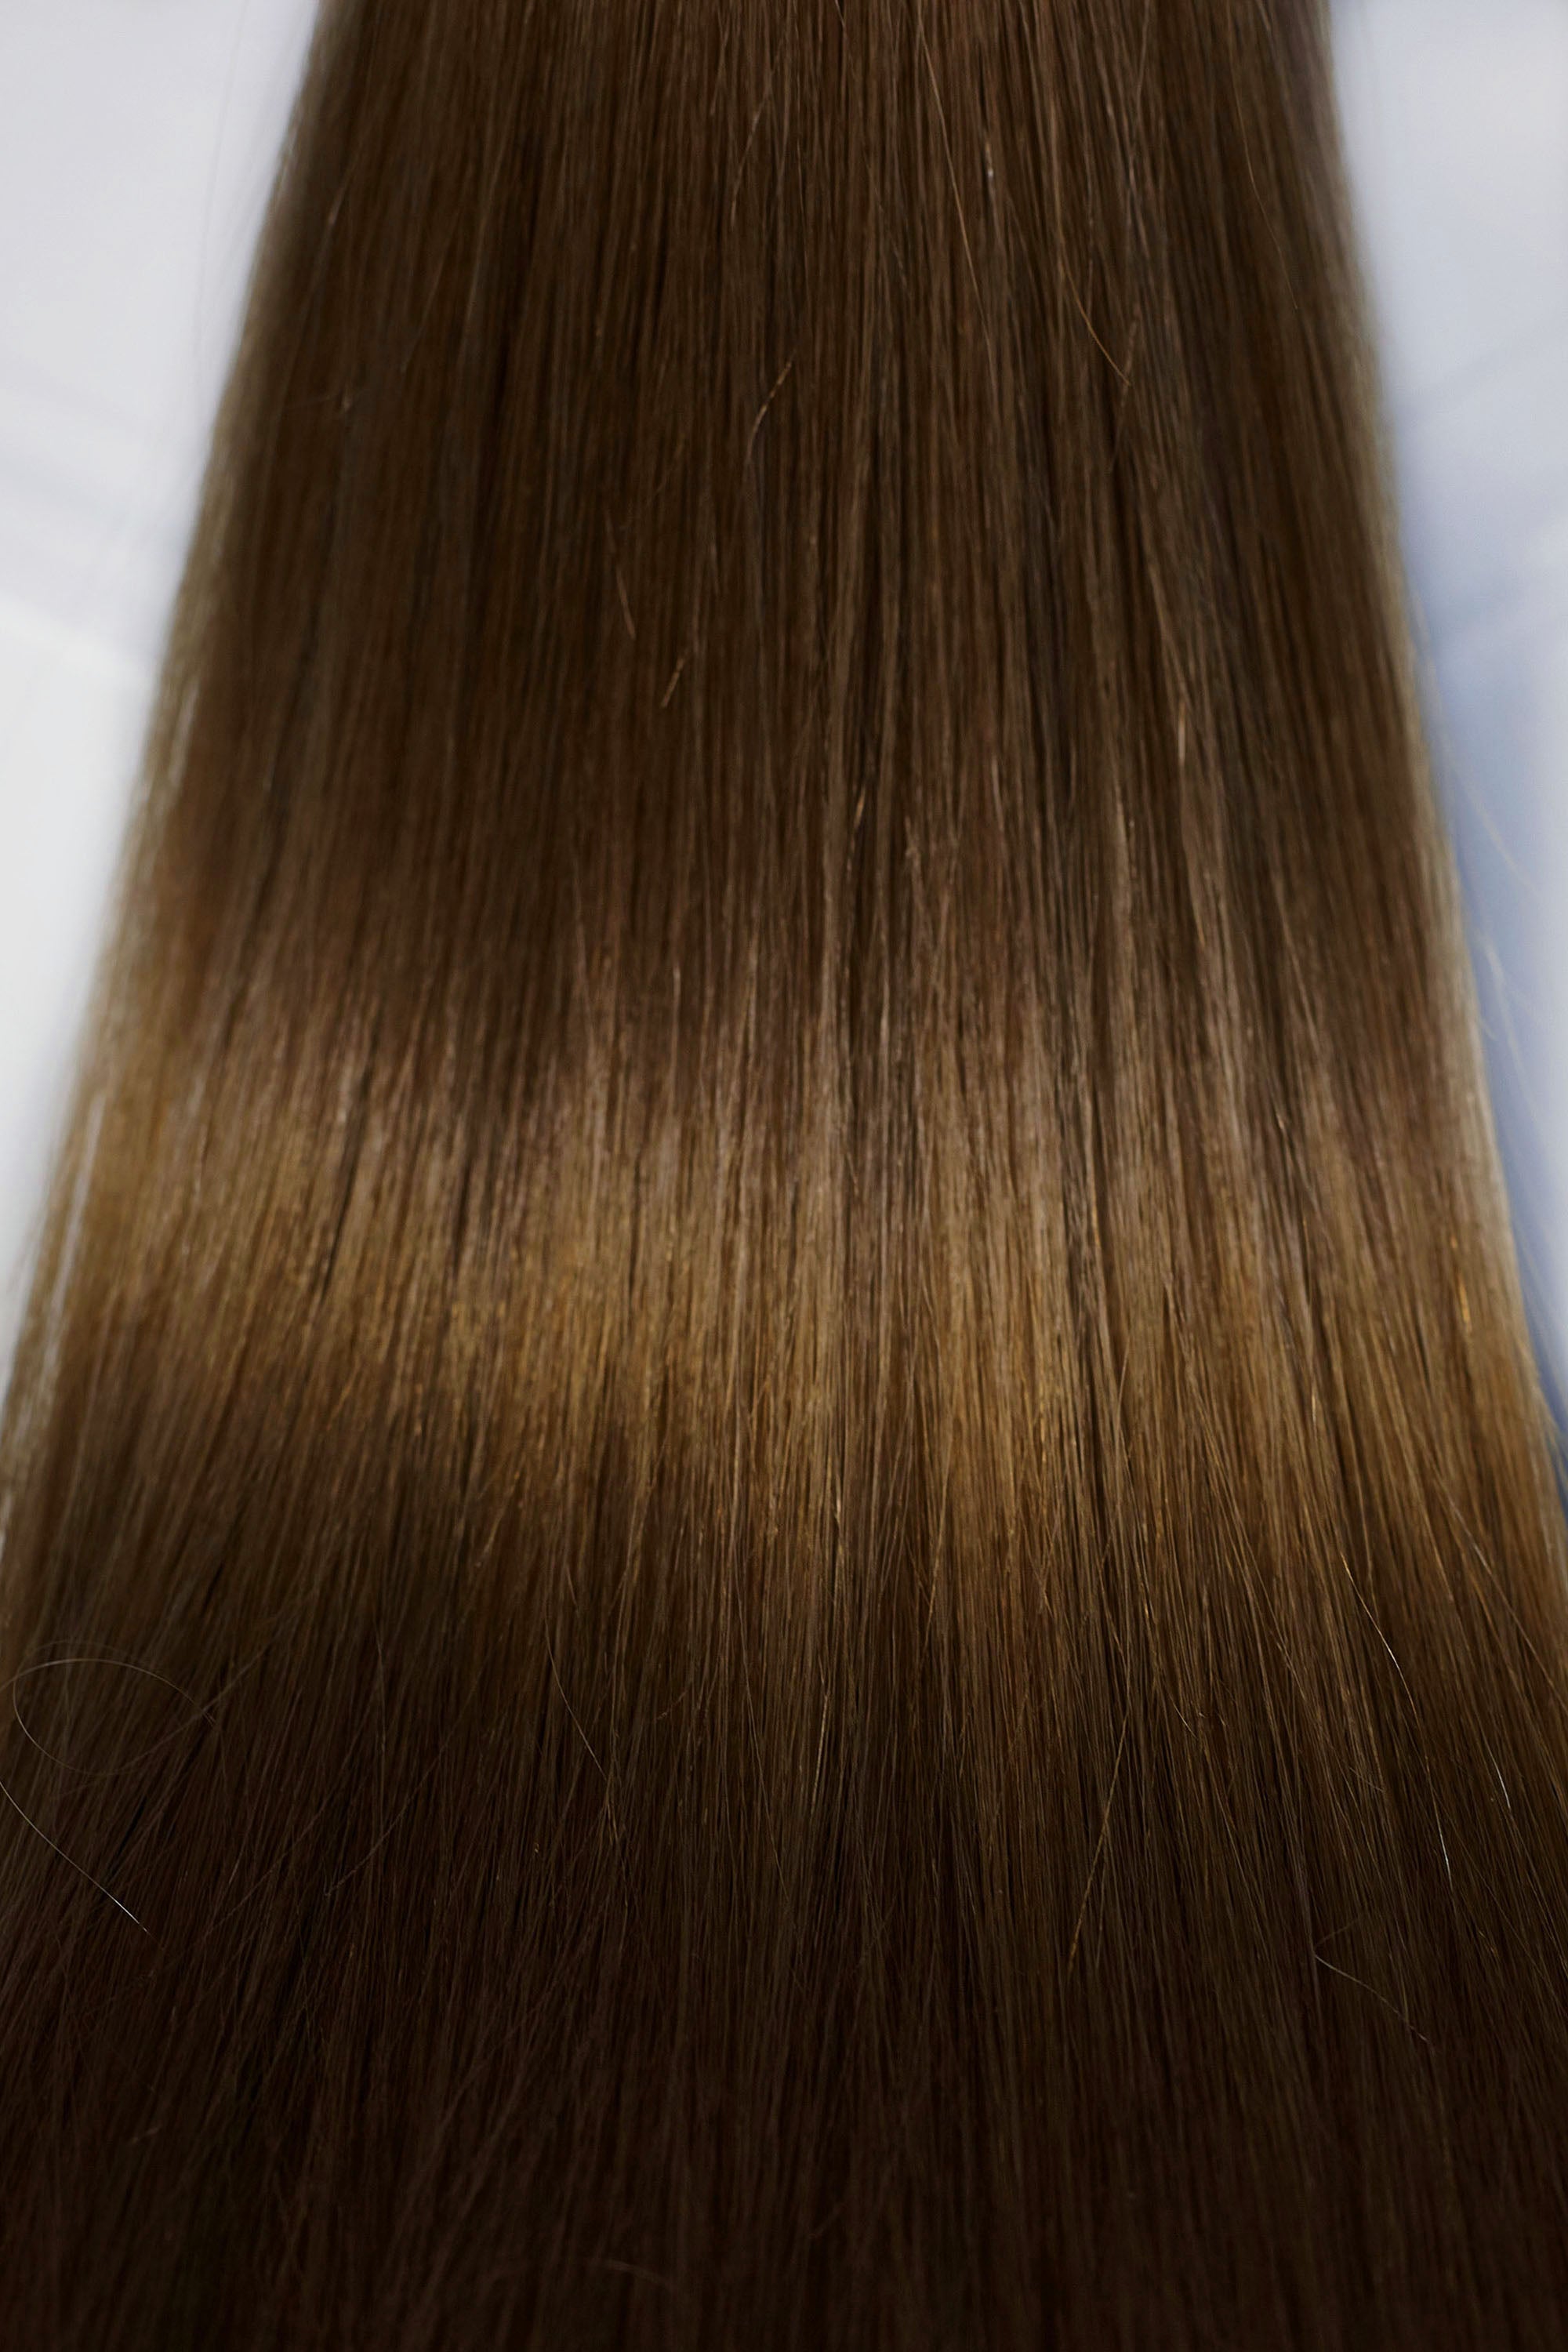 Behair professional Keratin Tip "Premium" 16" (40cm) Natural Straight Honey Walnut Brown #5 - 25g (Micro - 0.5g each pcs) hair extensions